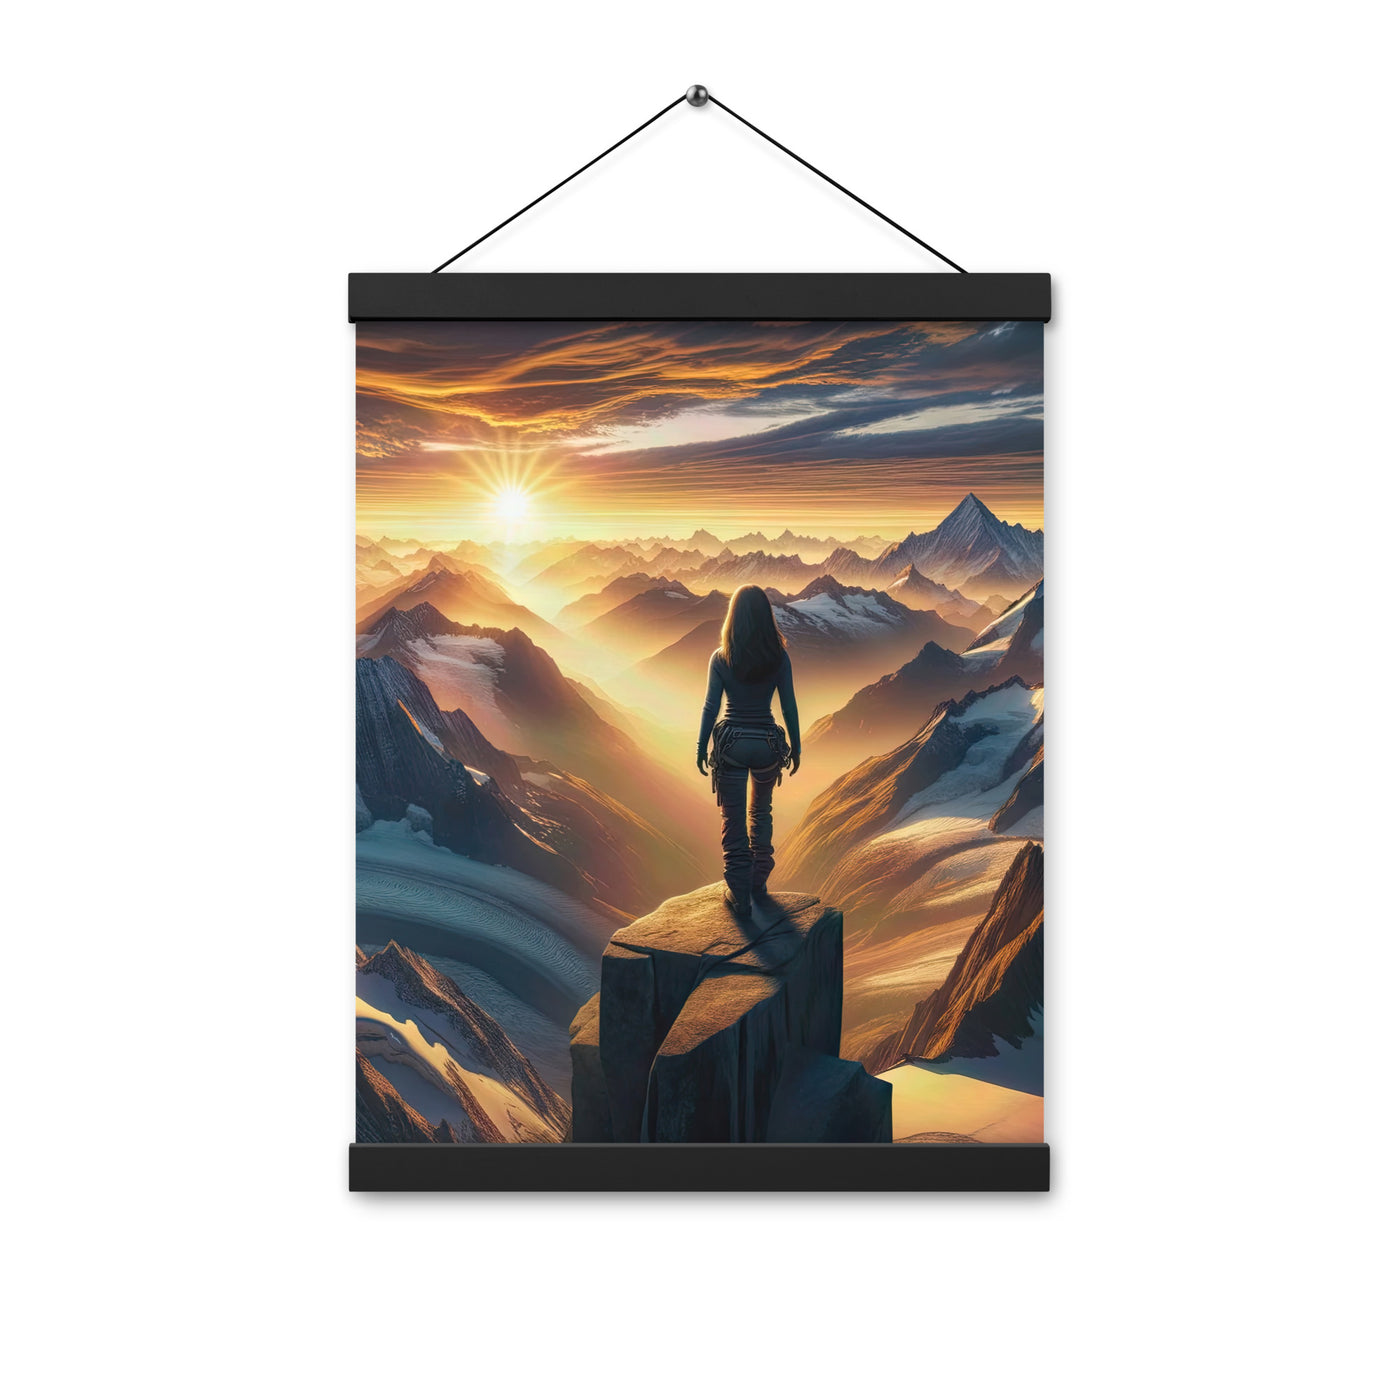 Fotorealistische Darstellung der Alpen bei Sonnenaufgang, Wanderin unter einem gold-purpurnen Himmel - Enhanced Matte Paper Poster With wandern xxx yyy zzz 30.5 x 40.6 cm